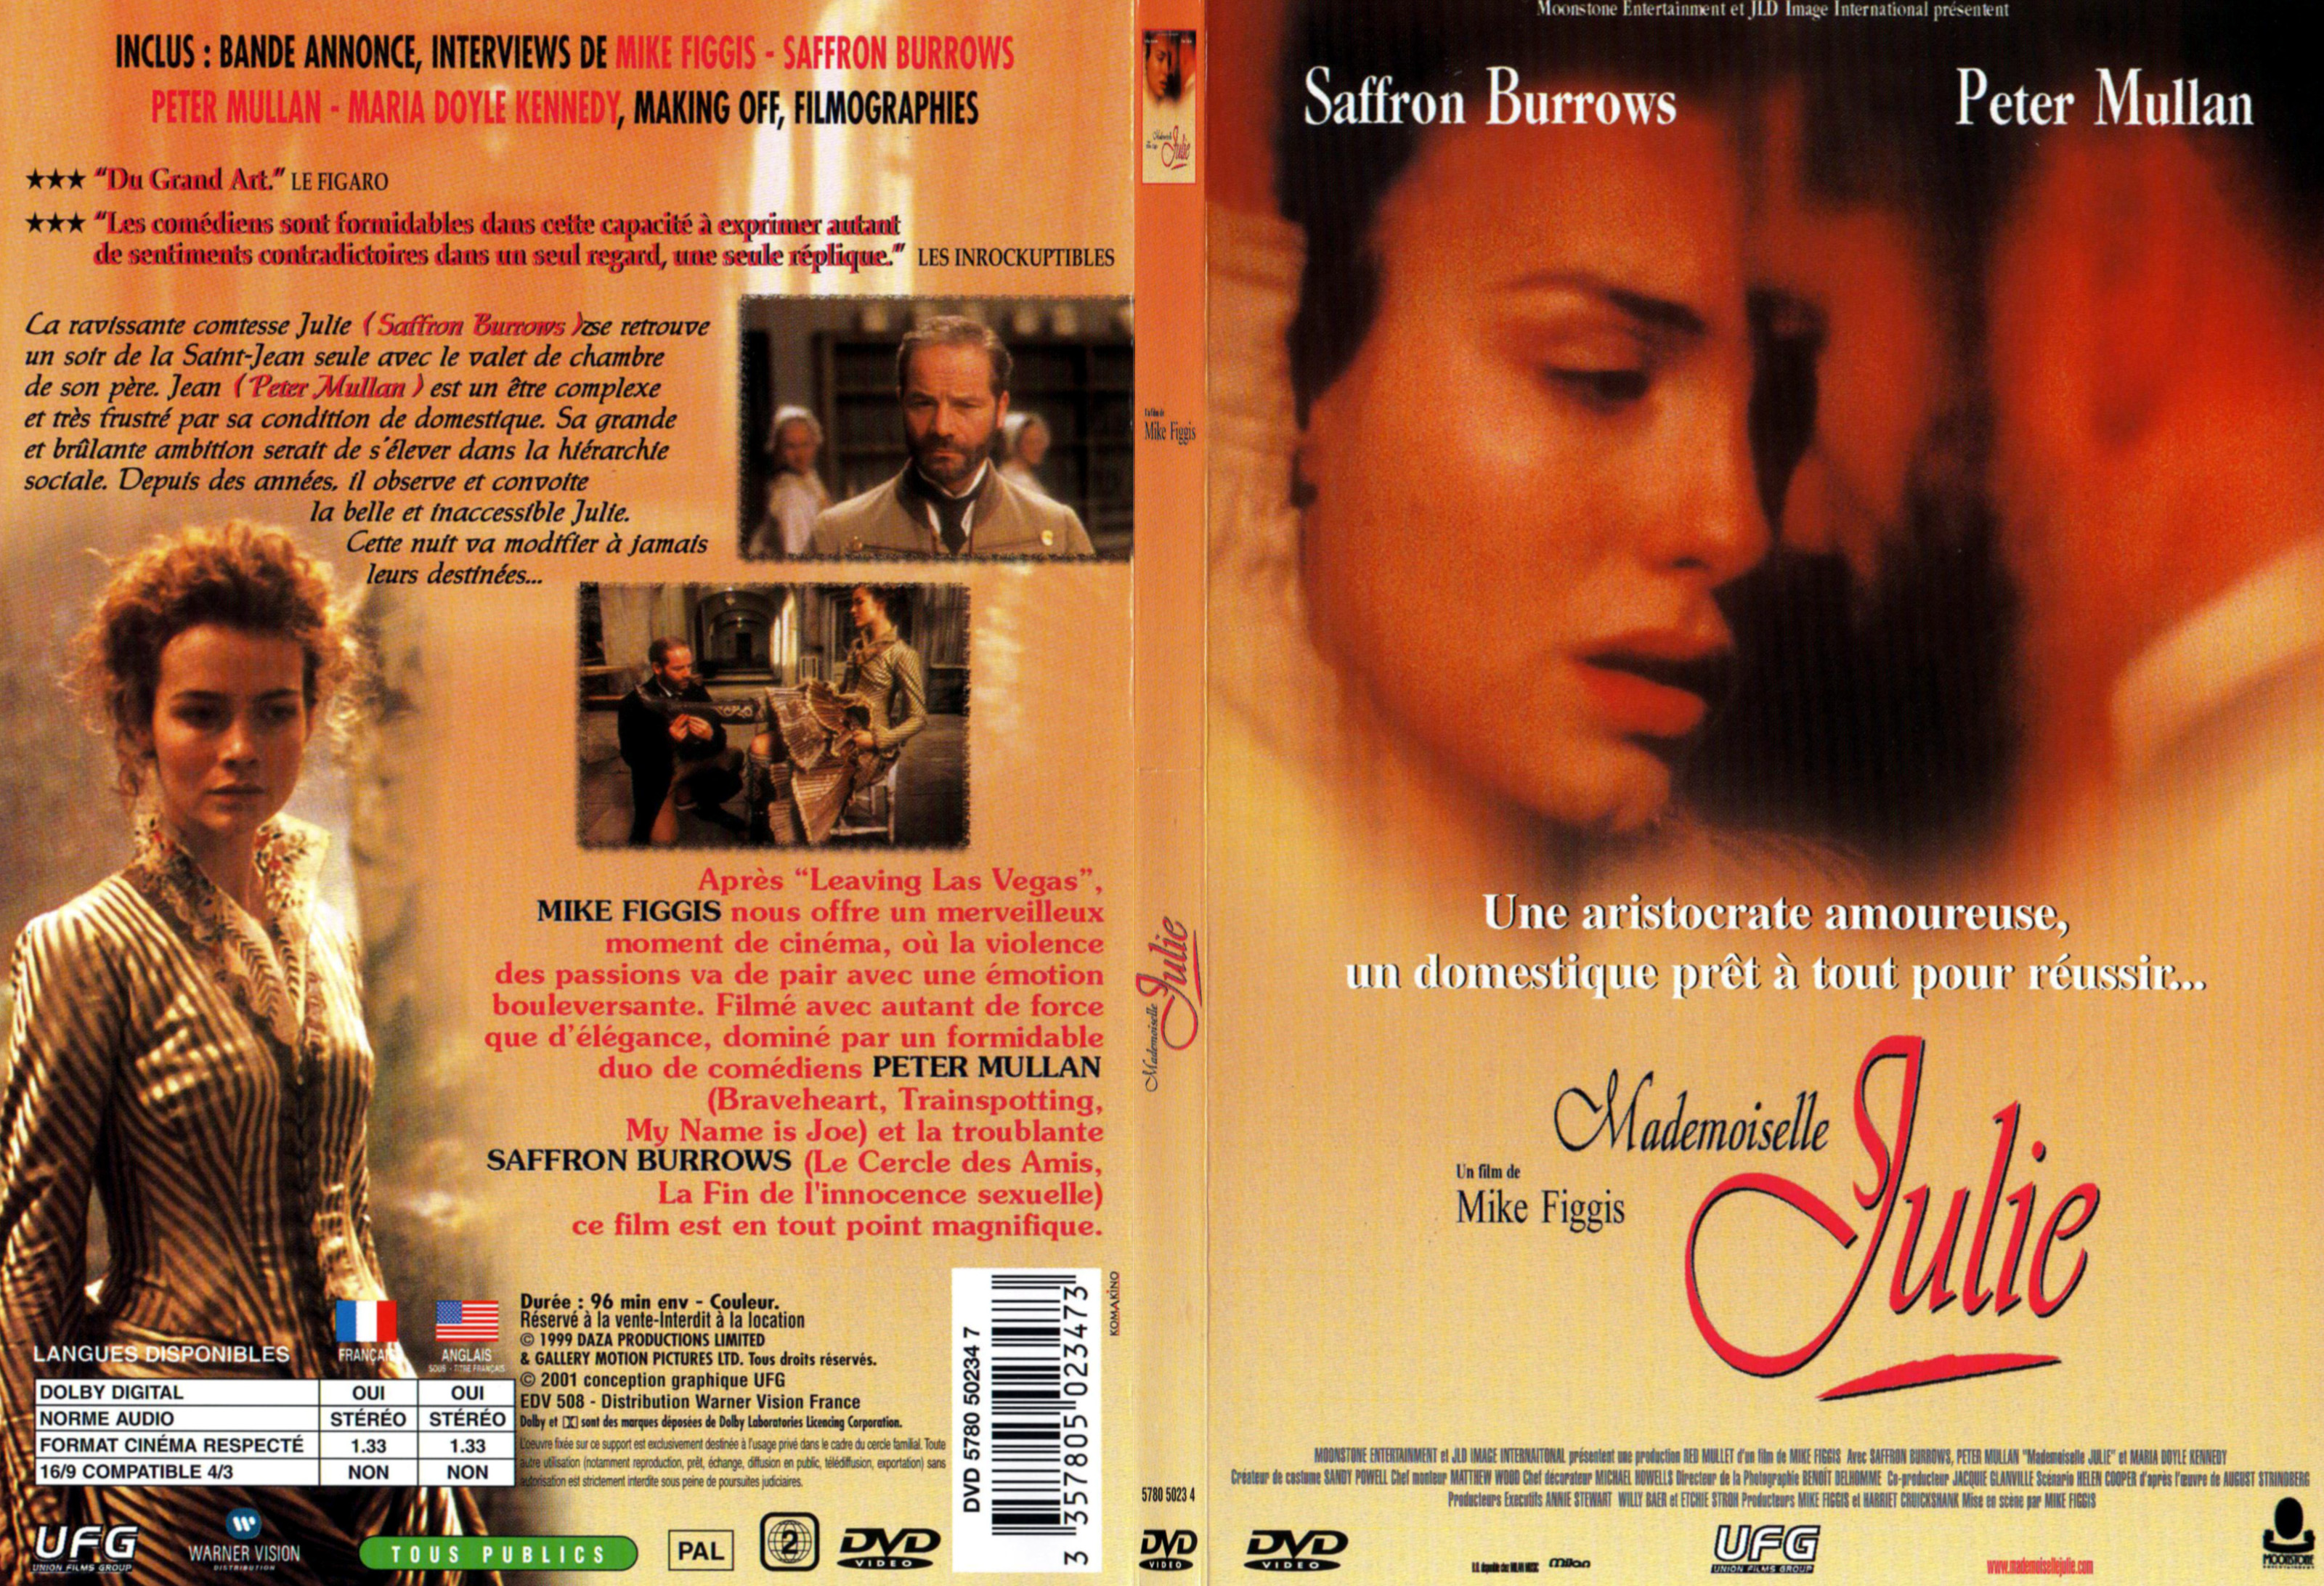 Jaquette DVD Mademoiselle Julie - SLIM